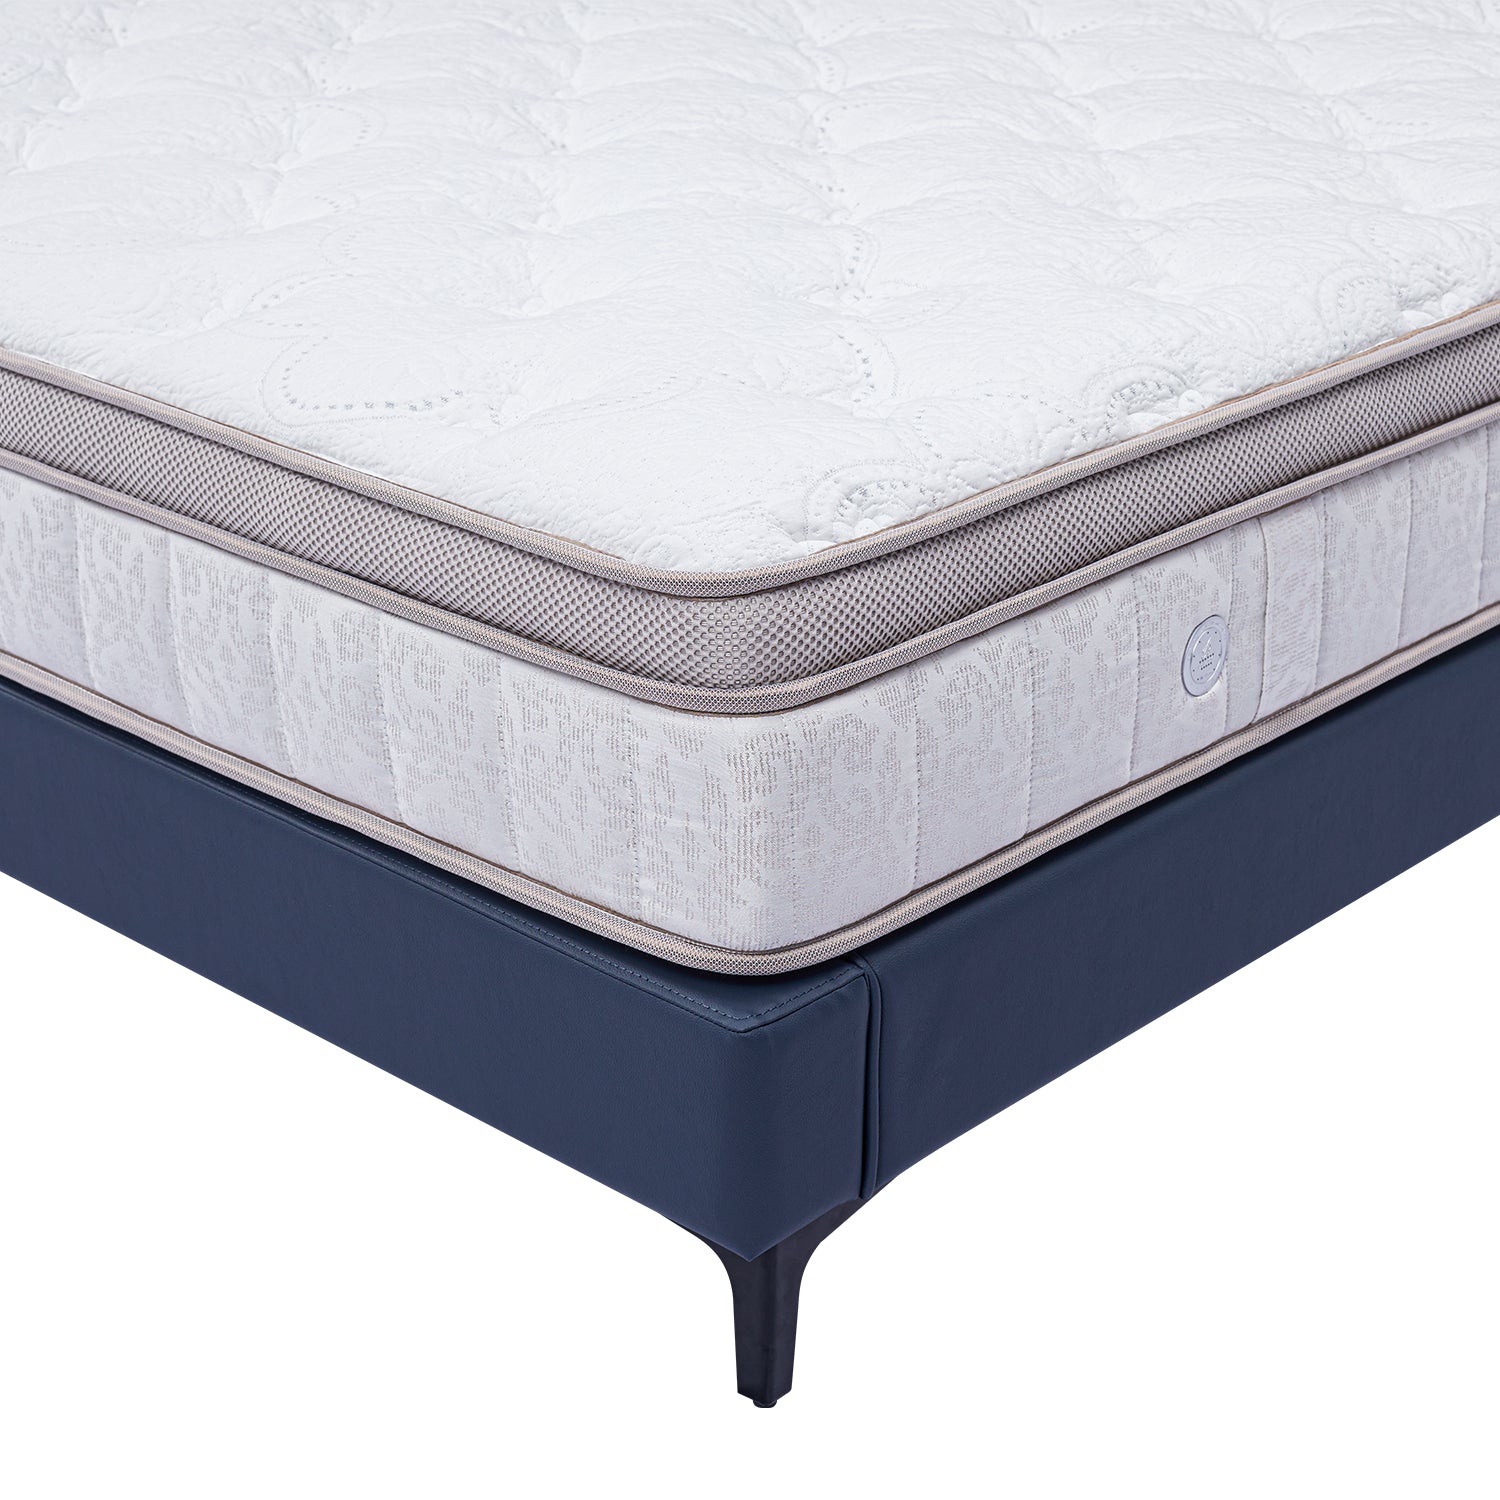 DeRUCCI Bed Frame BOC1 - 017 with a white quilted mattress, dark blue sturdy frame.